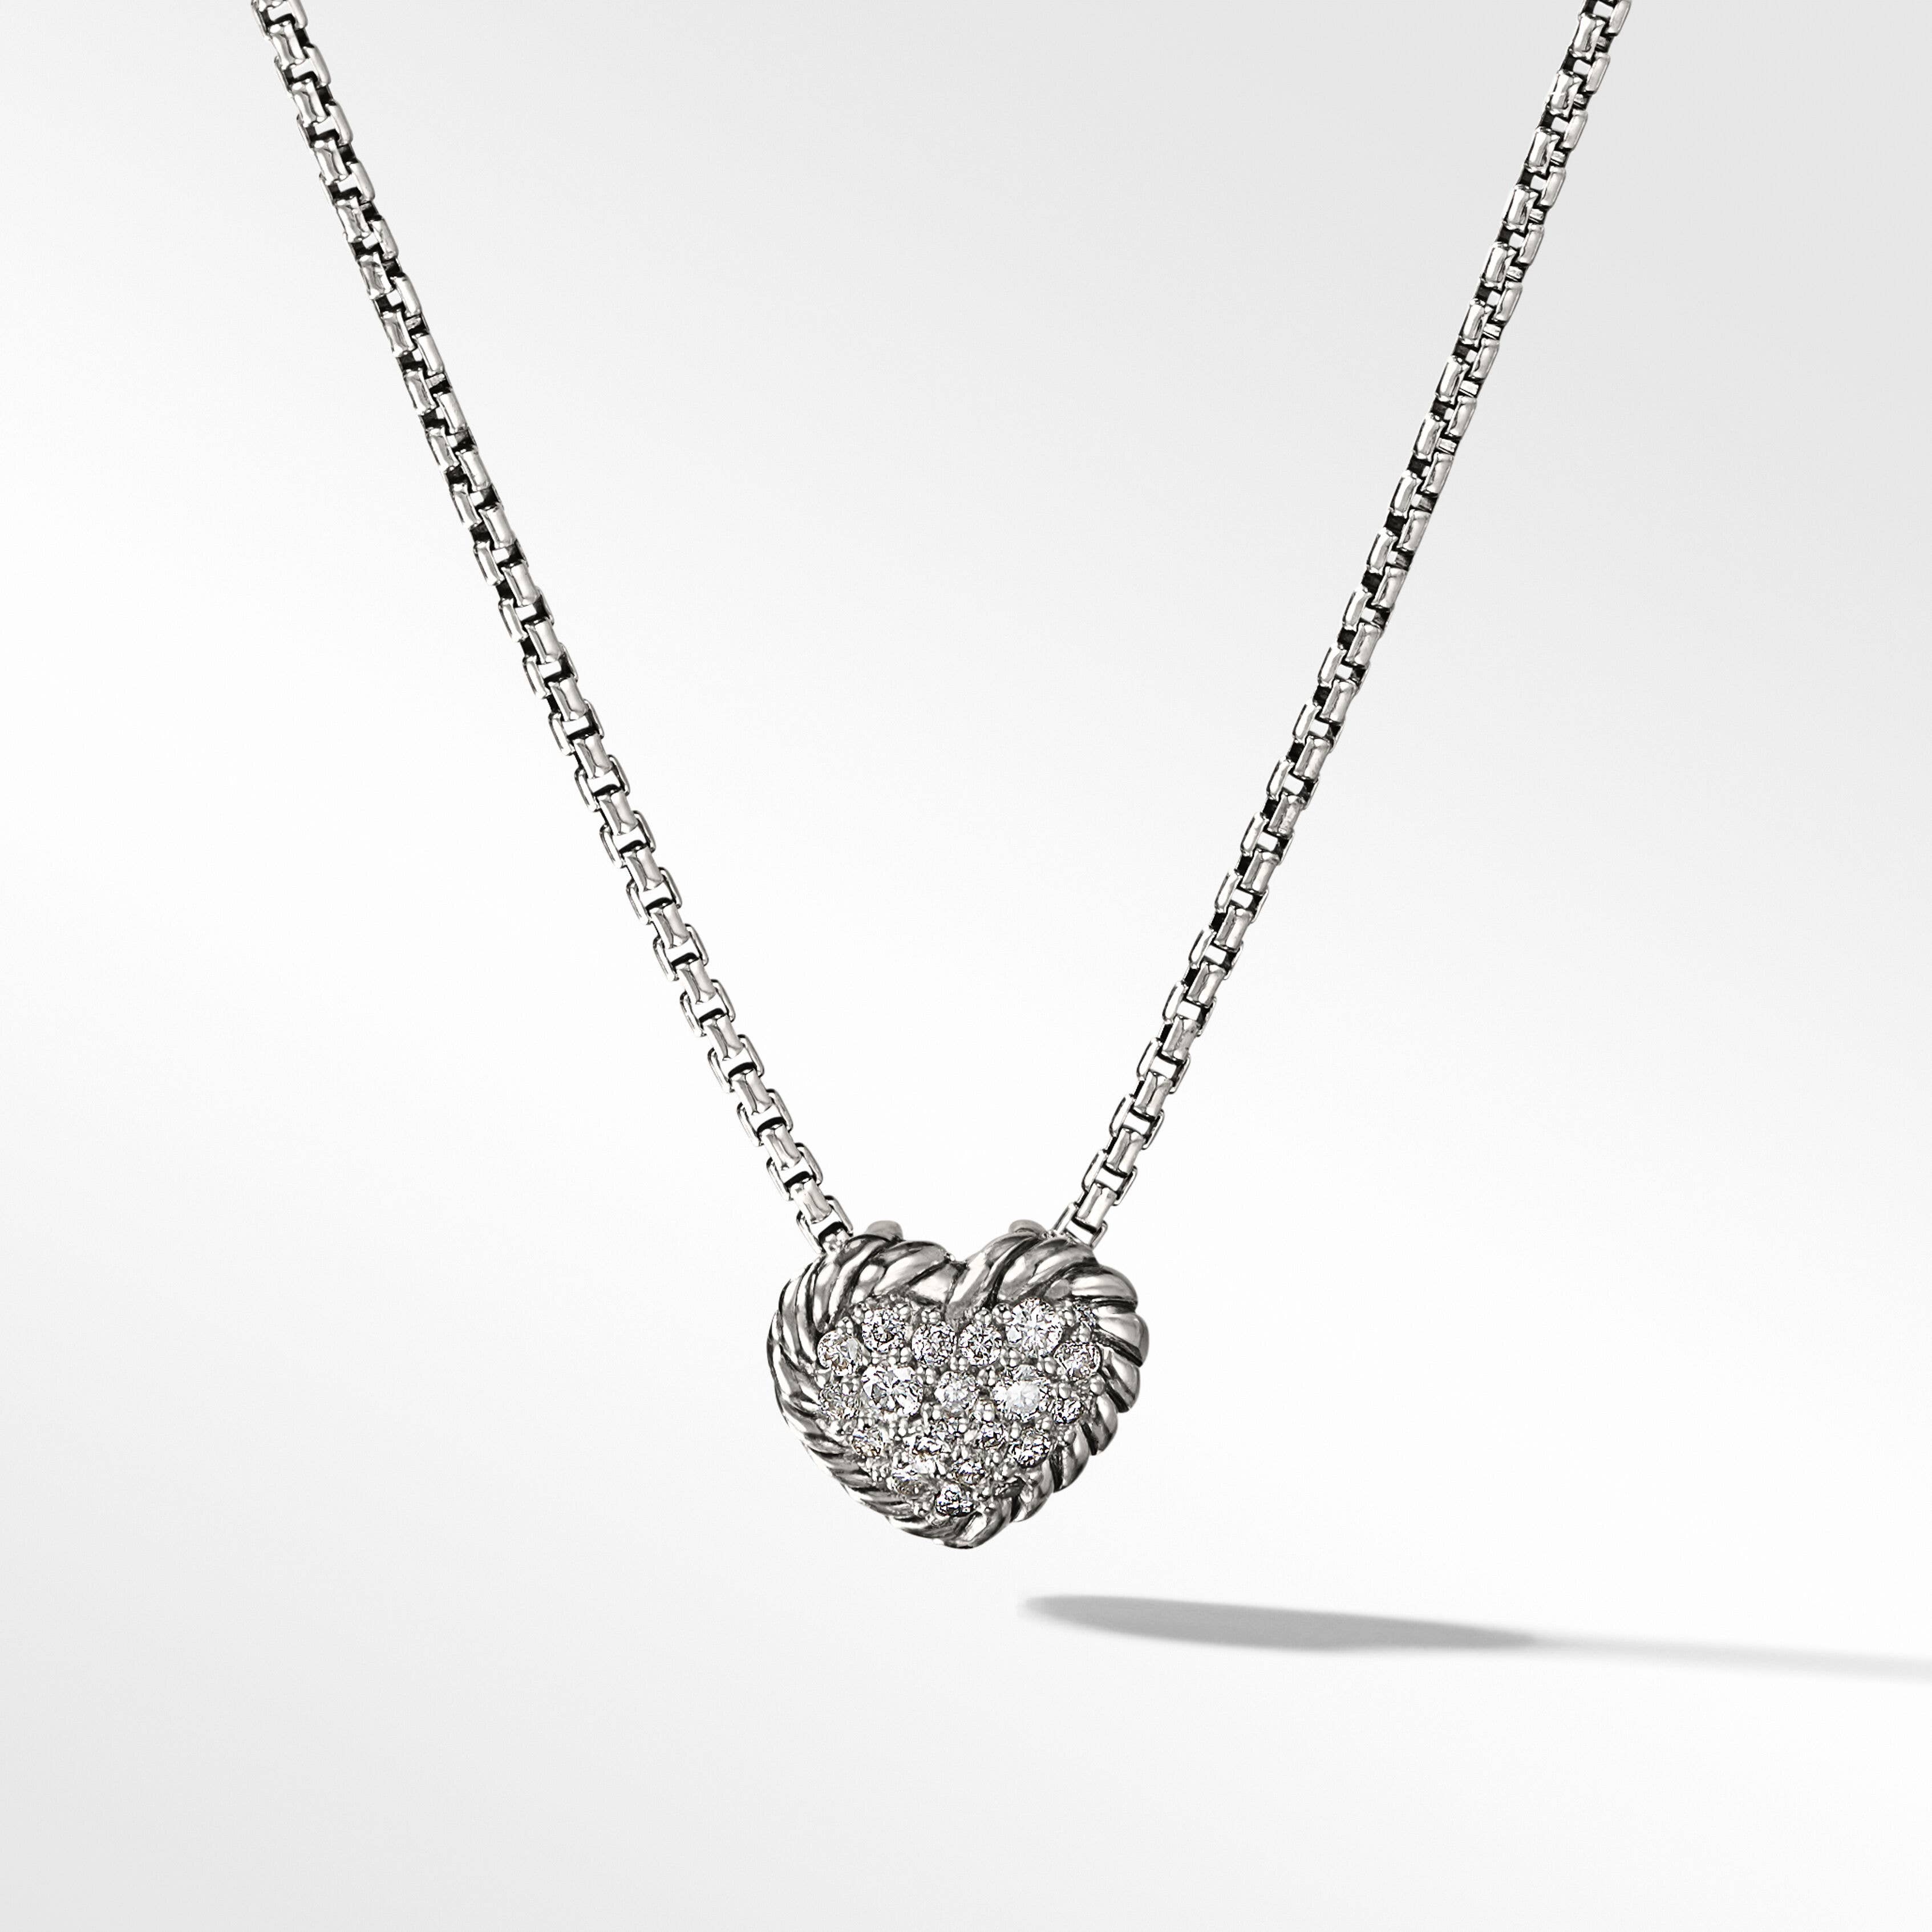 Petite Pavé Heart Necklace with Diamonds